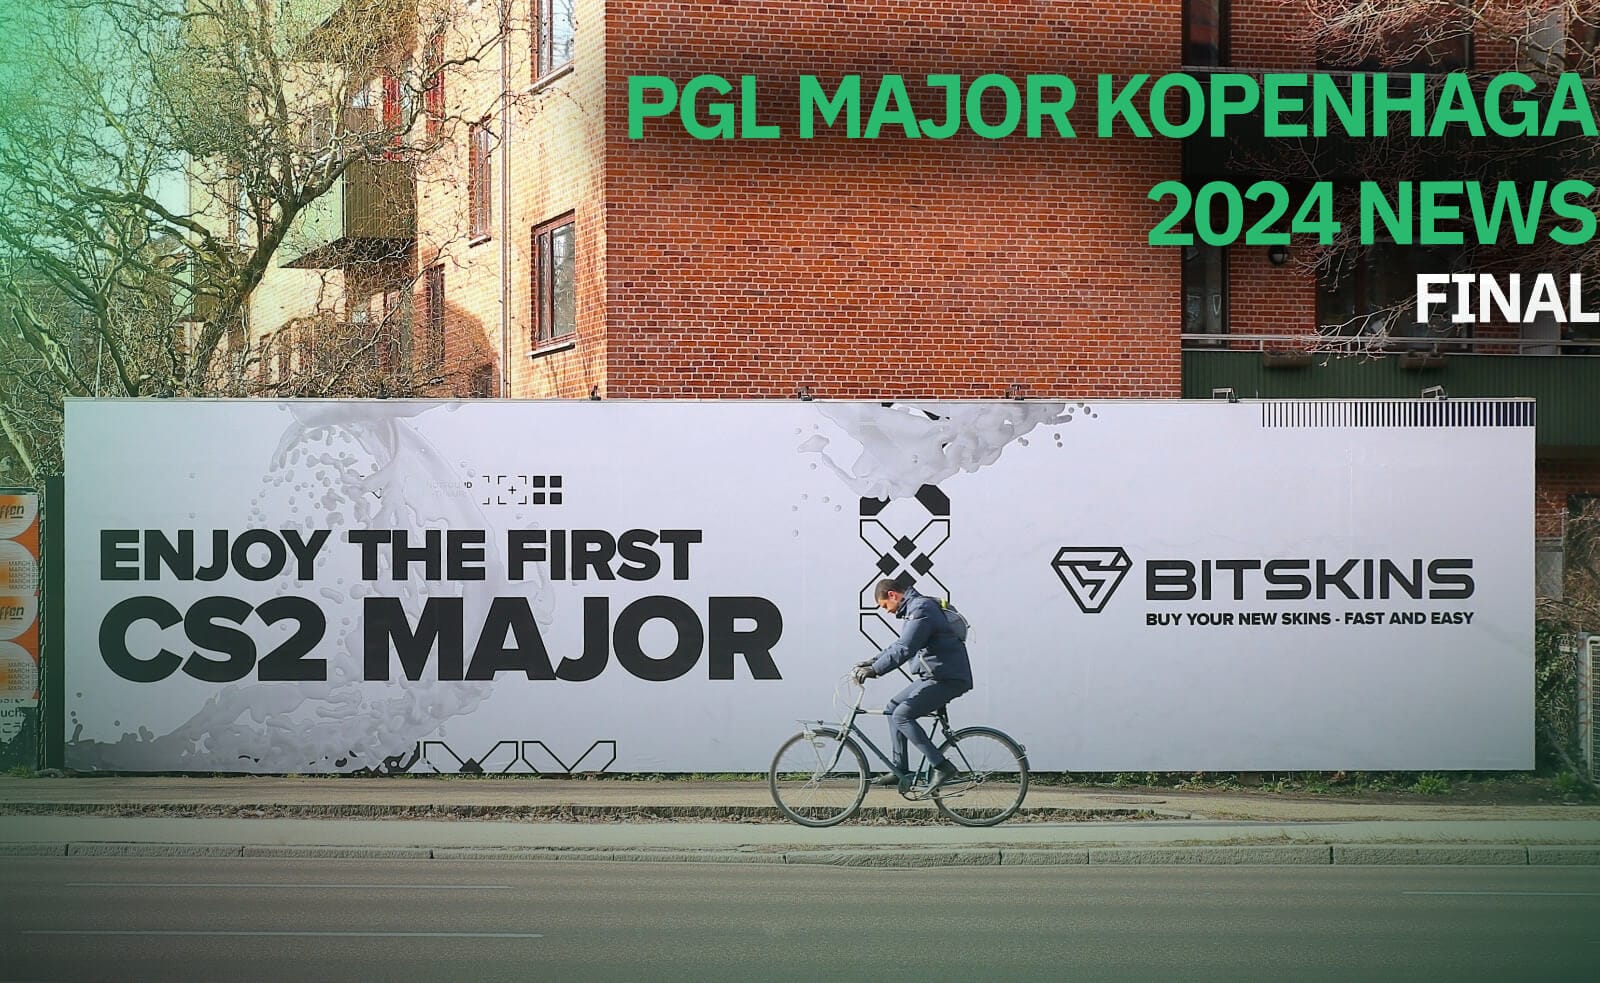 [PL] PGL Major Kopenhaga 2024 News - Finał